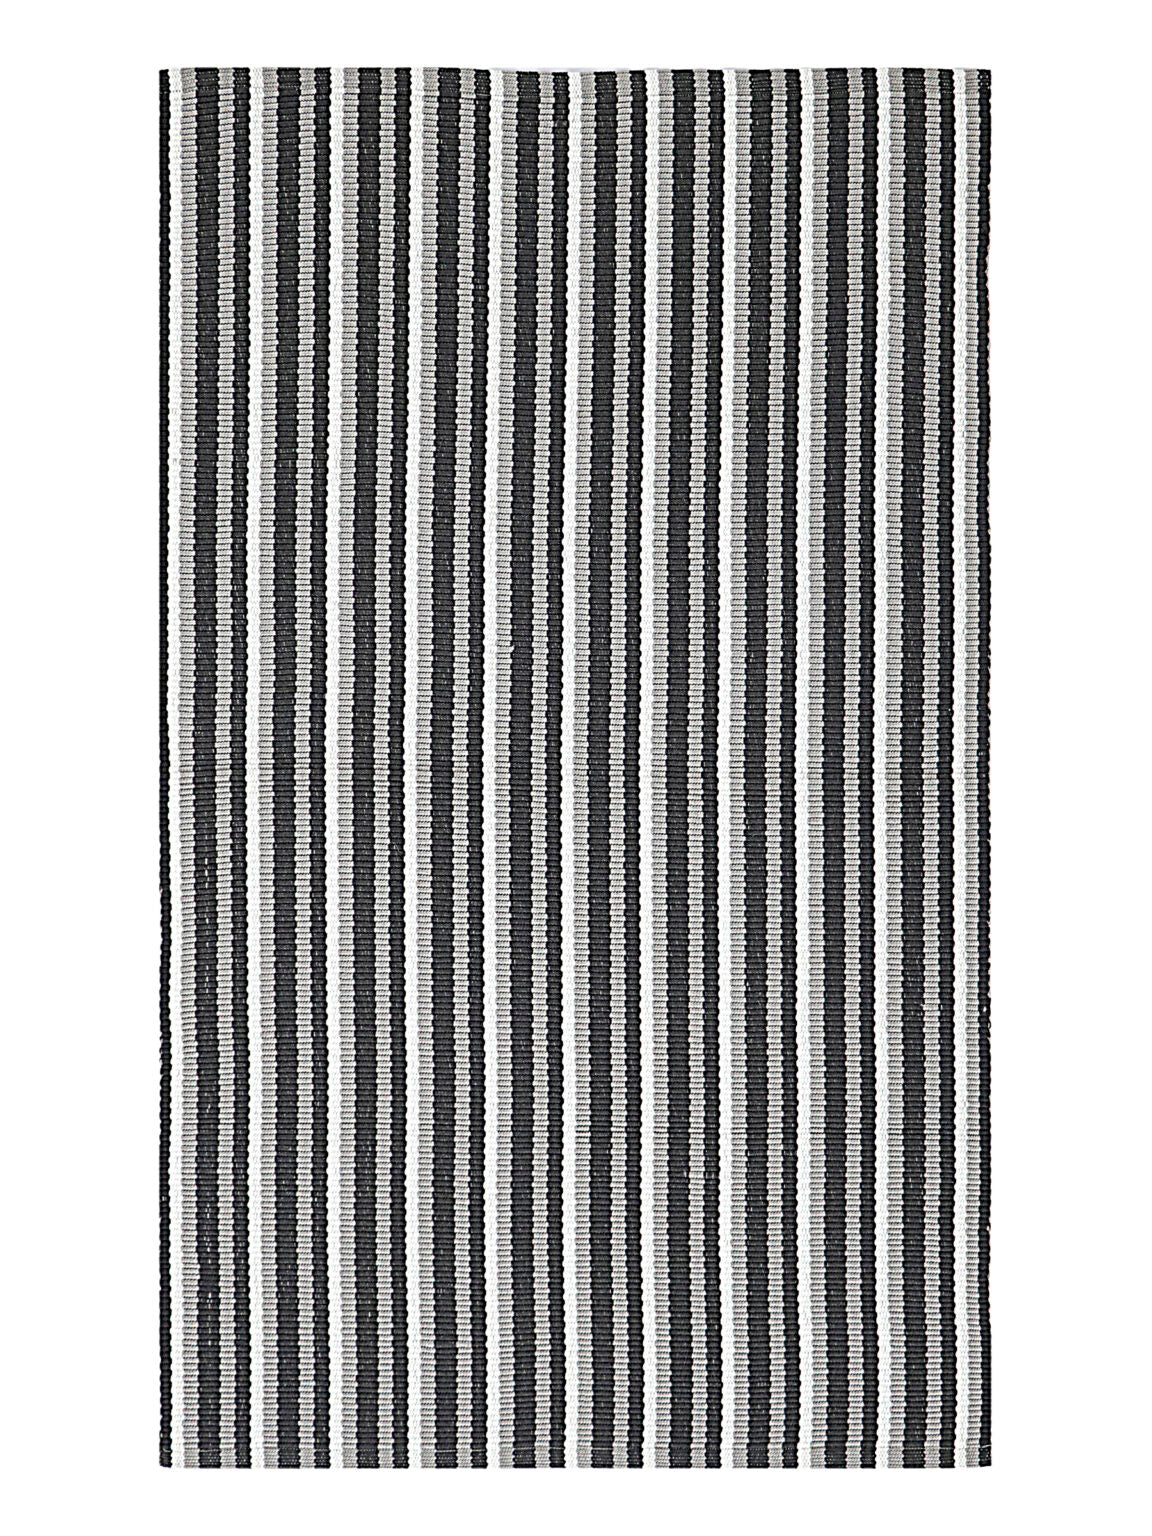 Great Plains Multi-Purpose Utility Mat Collection, Modern Stripe